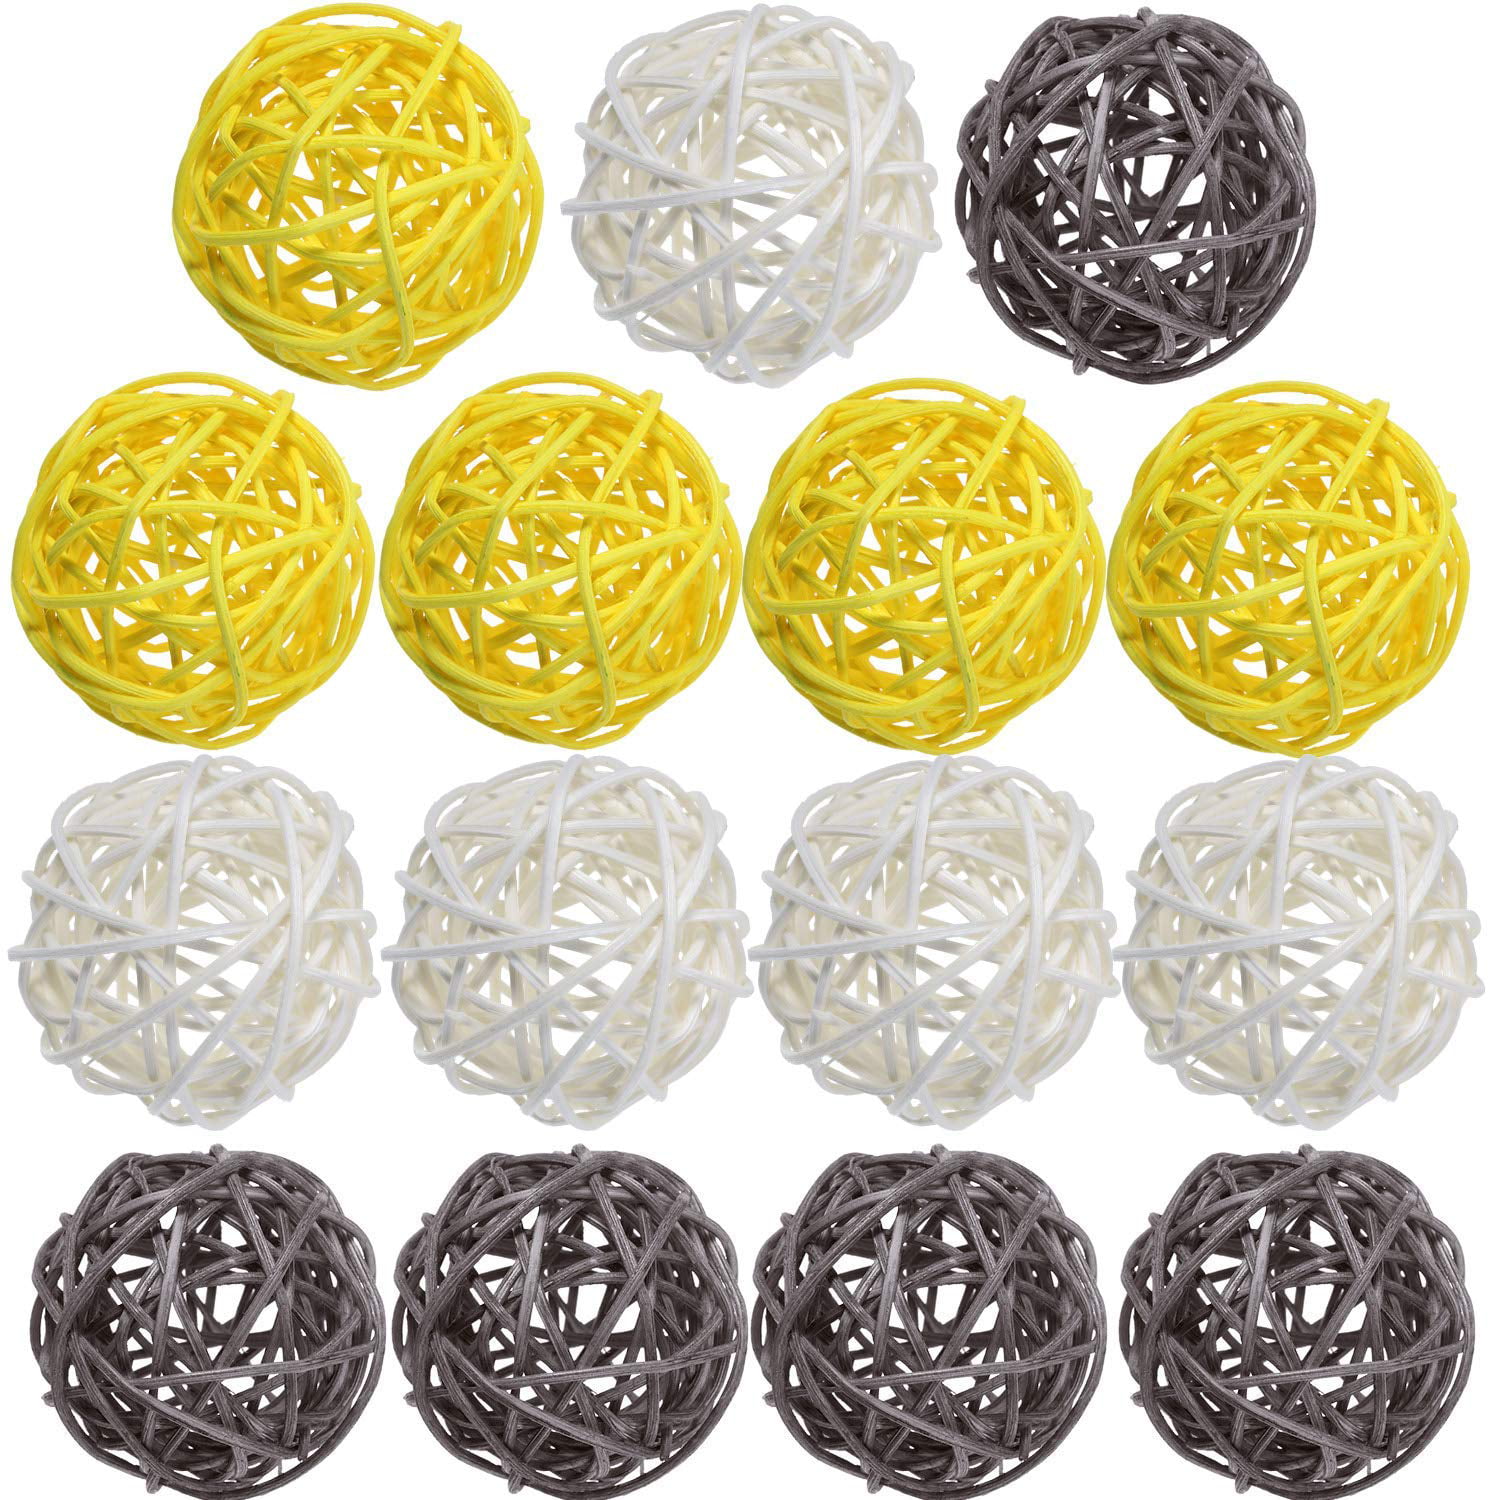 Wickers Rattan Balls with Rattan Material Decorative for Vase Filler Black House Ornament 5 Colors 20pcs Rattan Balls